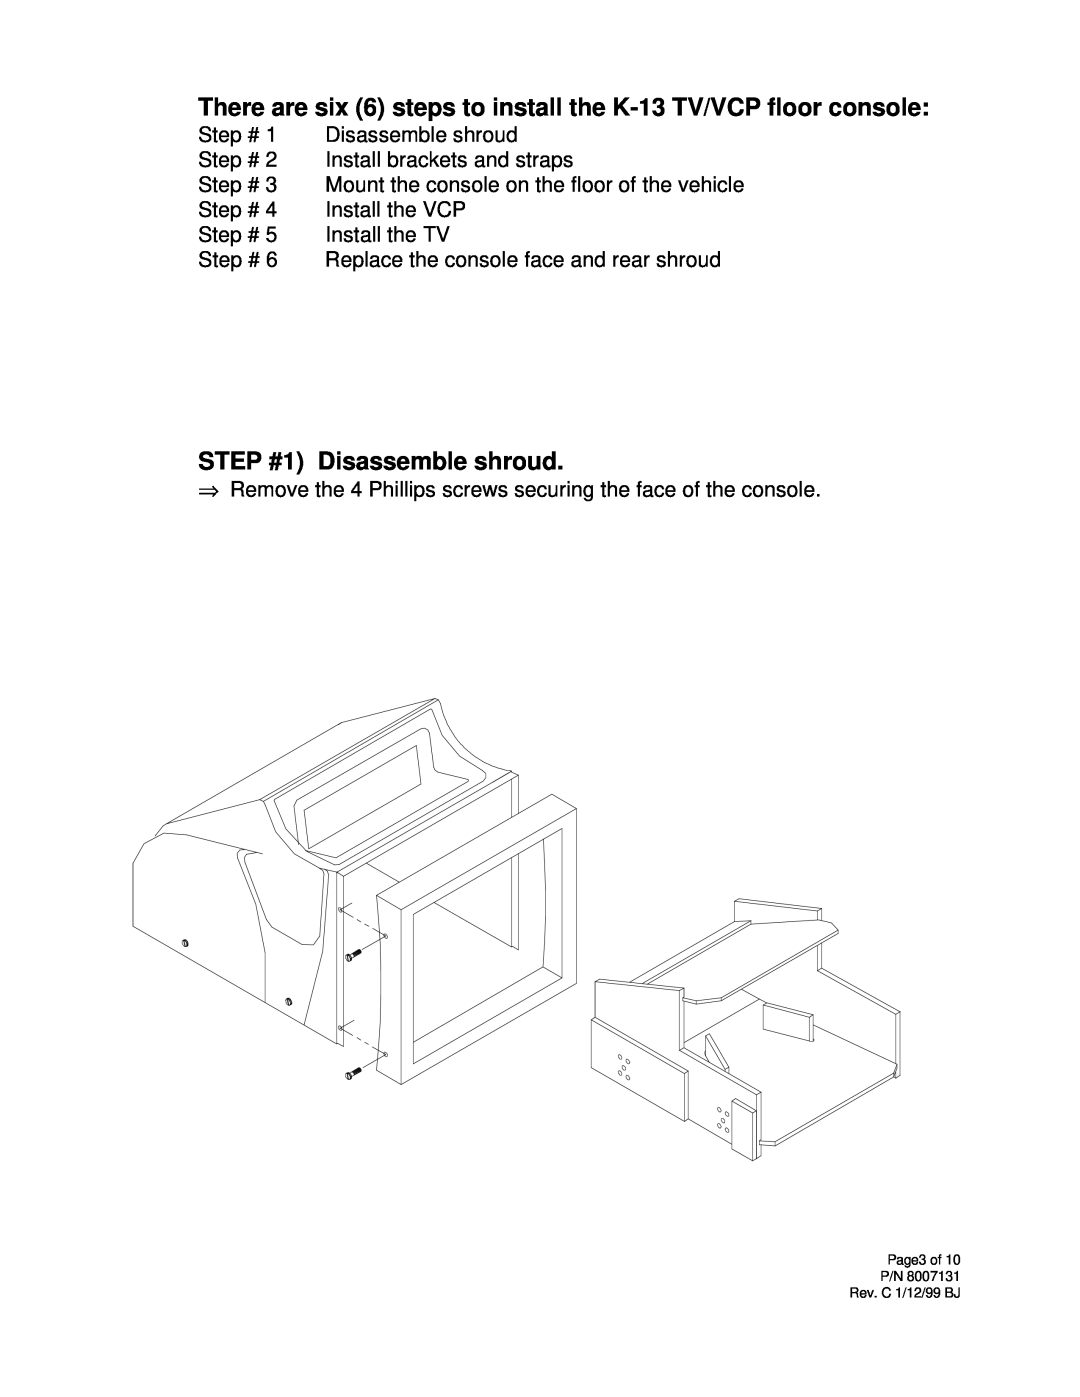 Audiovox K-13 installation instructions STEP #1 Disassemble shroud 